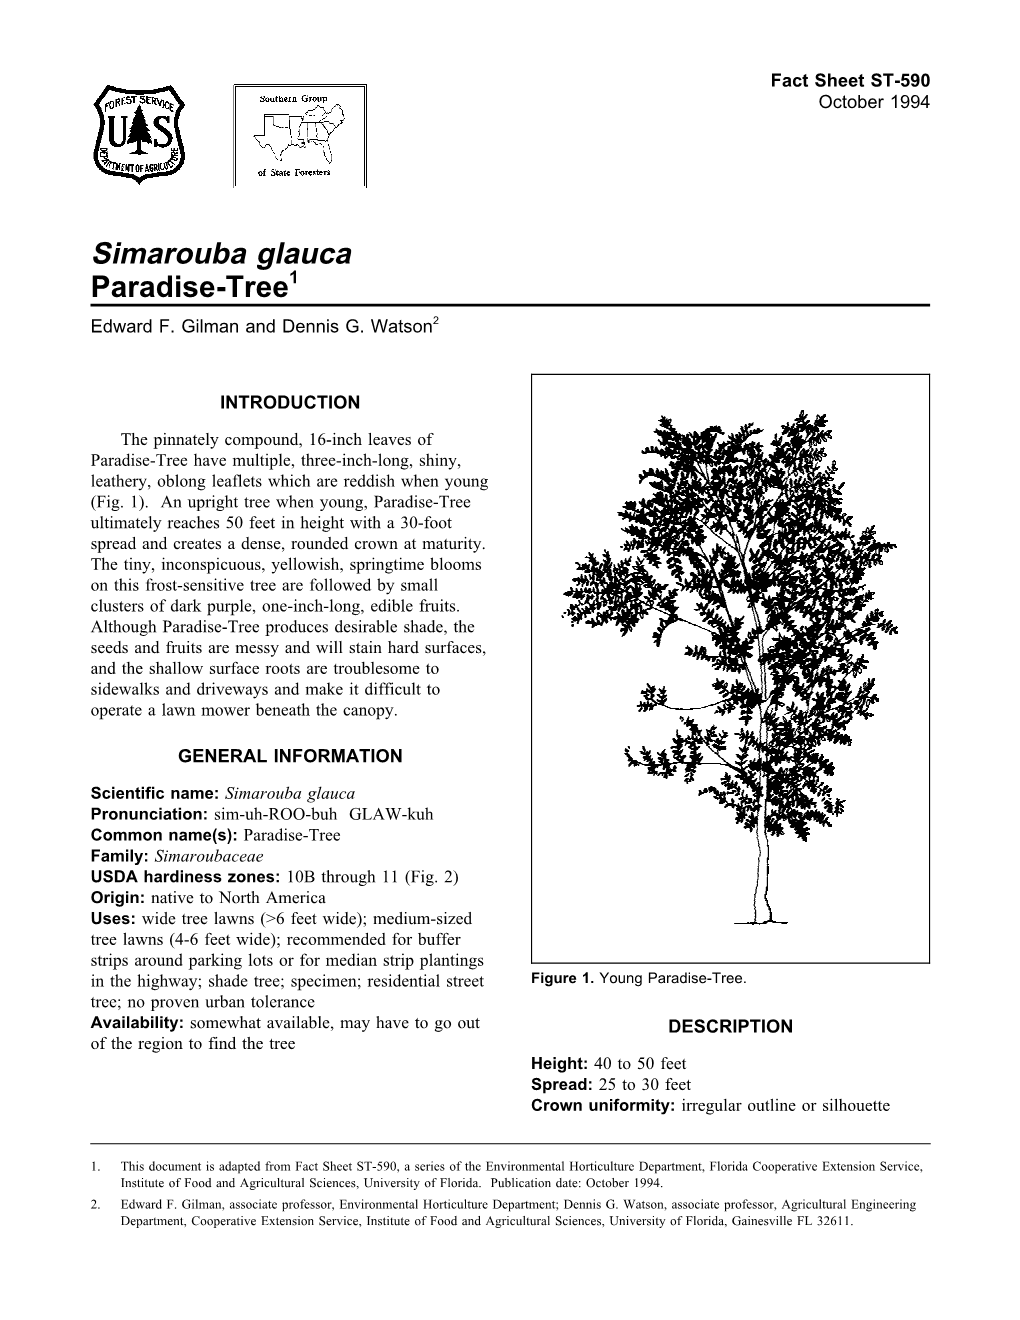 Simarouba Glauca Paradise-Tree1 Edward F